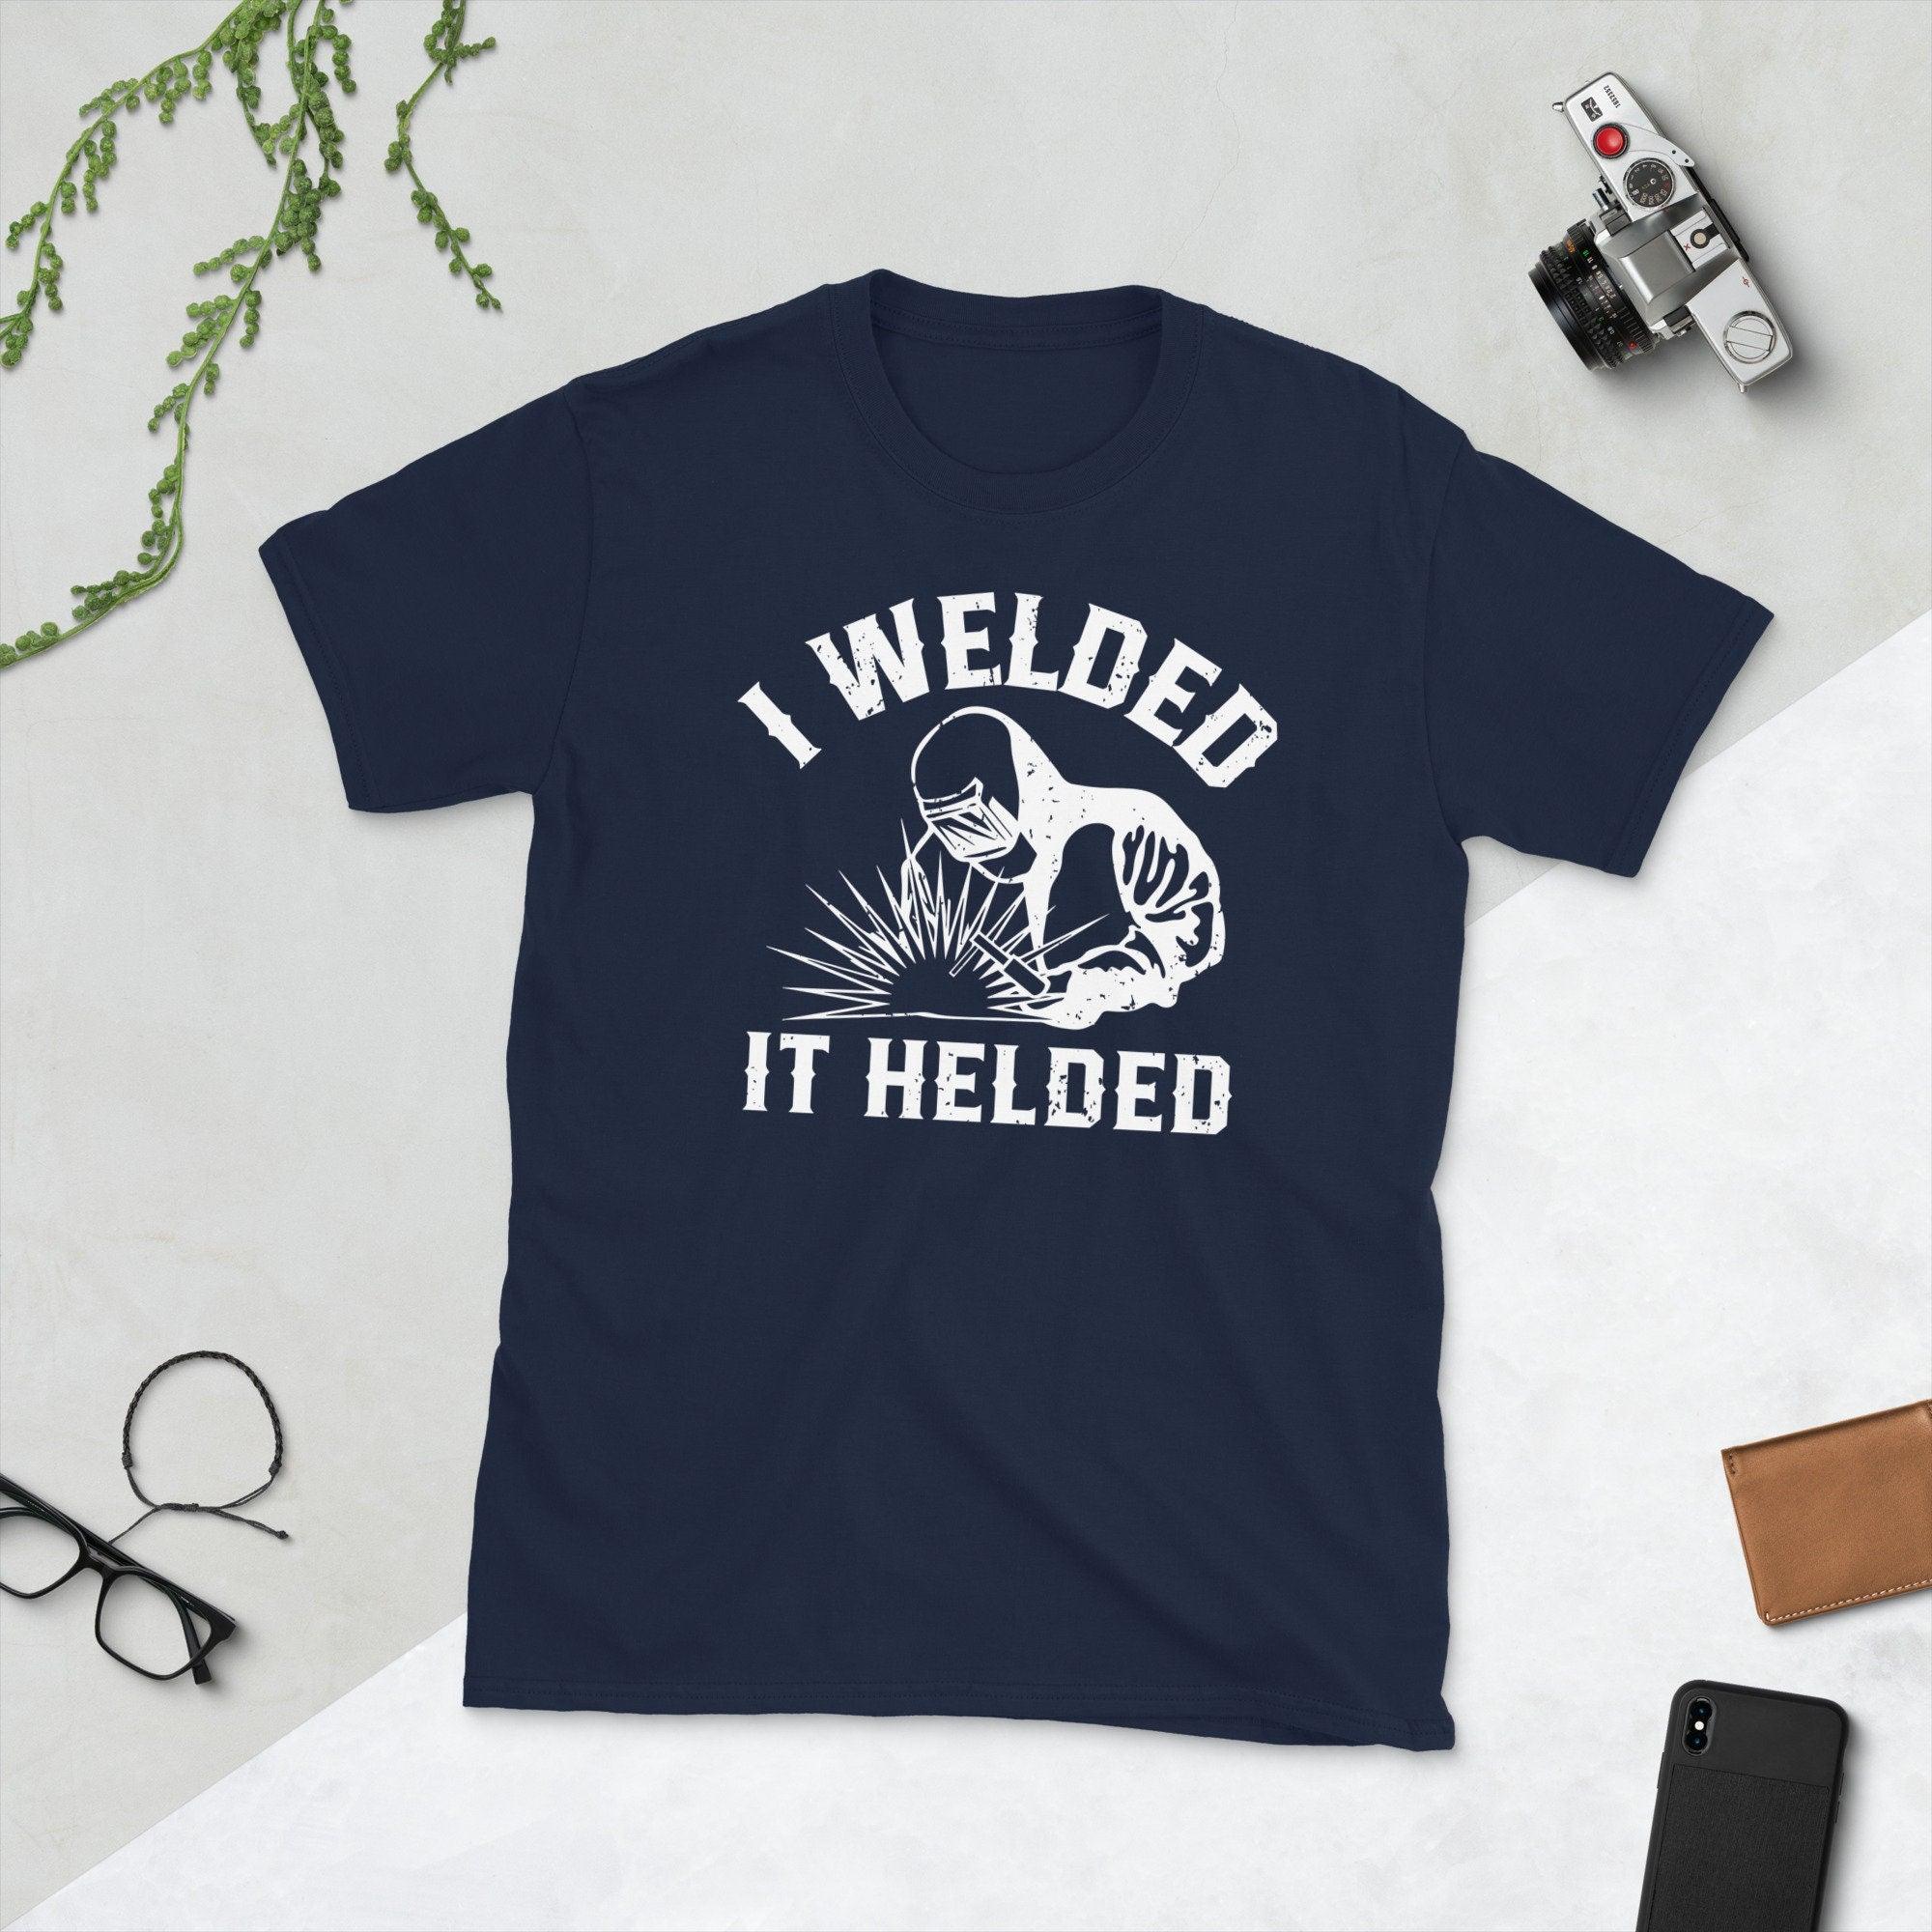 I Welded It Helded, унісекс-футболка Welder, падарунак Welder, вясёлая футболка са зварным сілуэтам у стылі рэтра - plusminusco.com